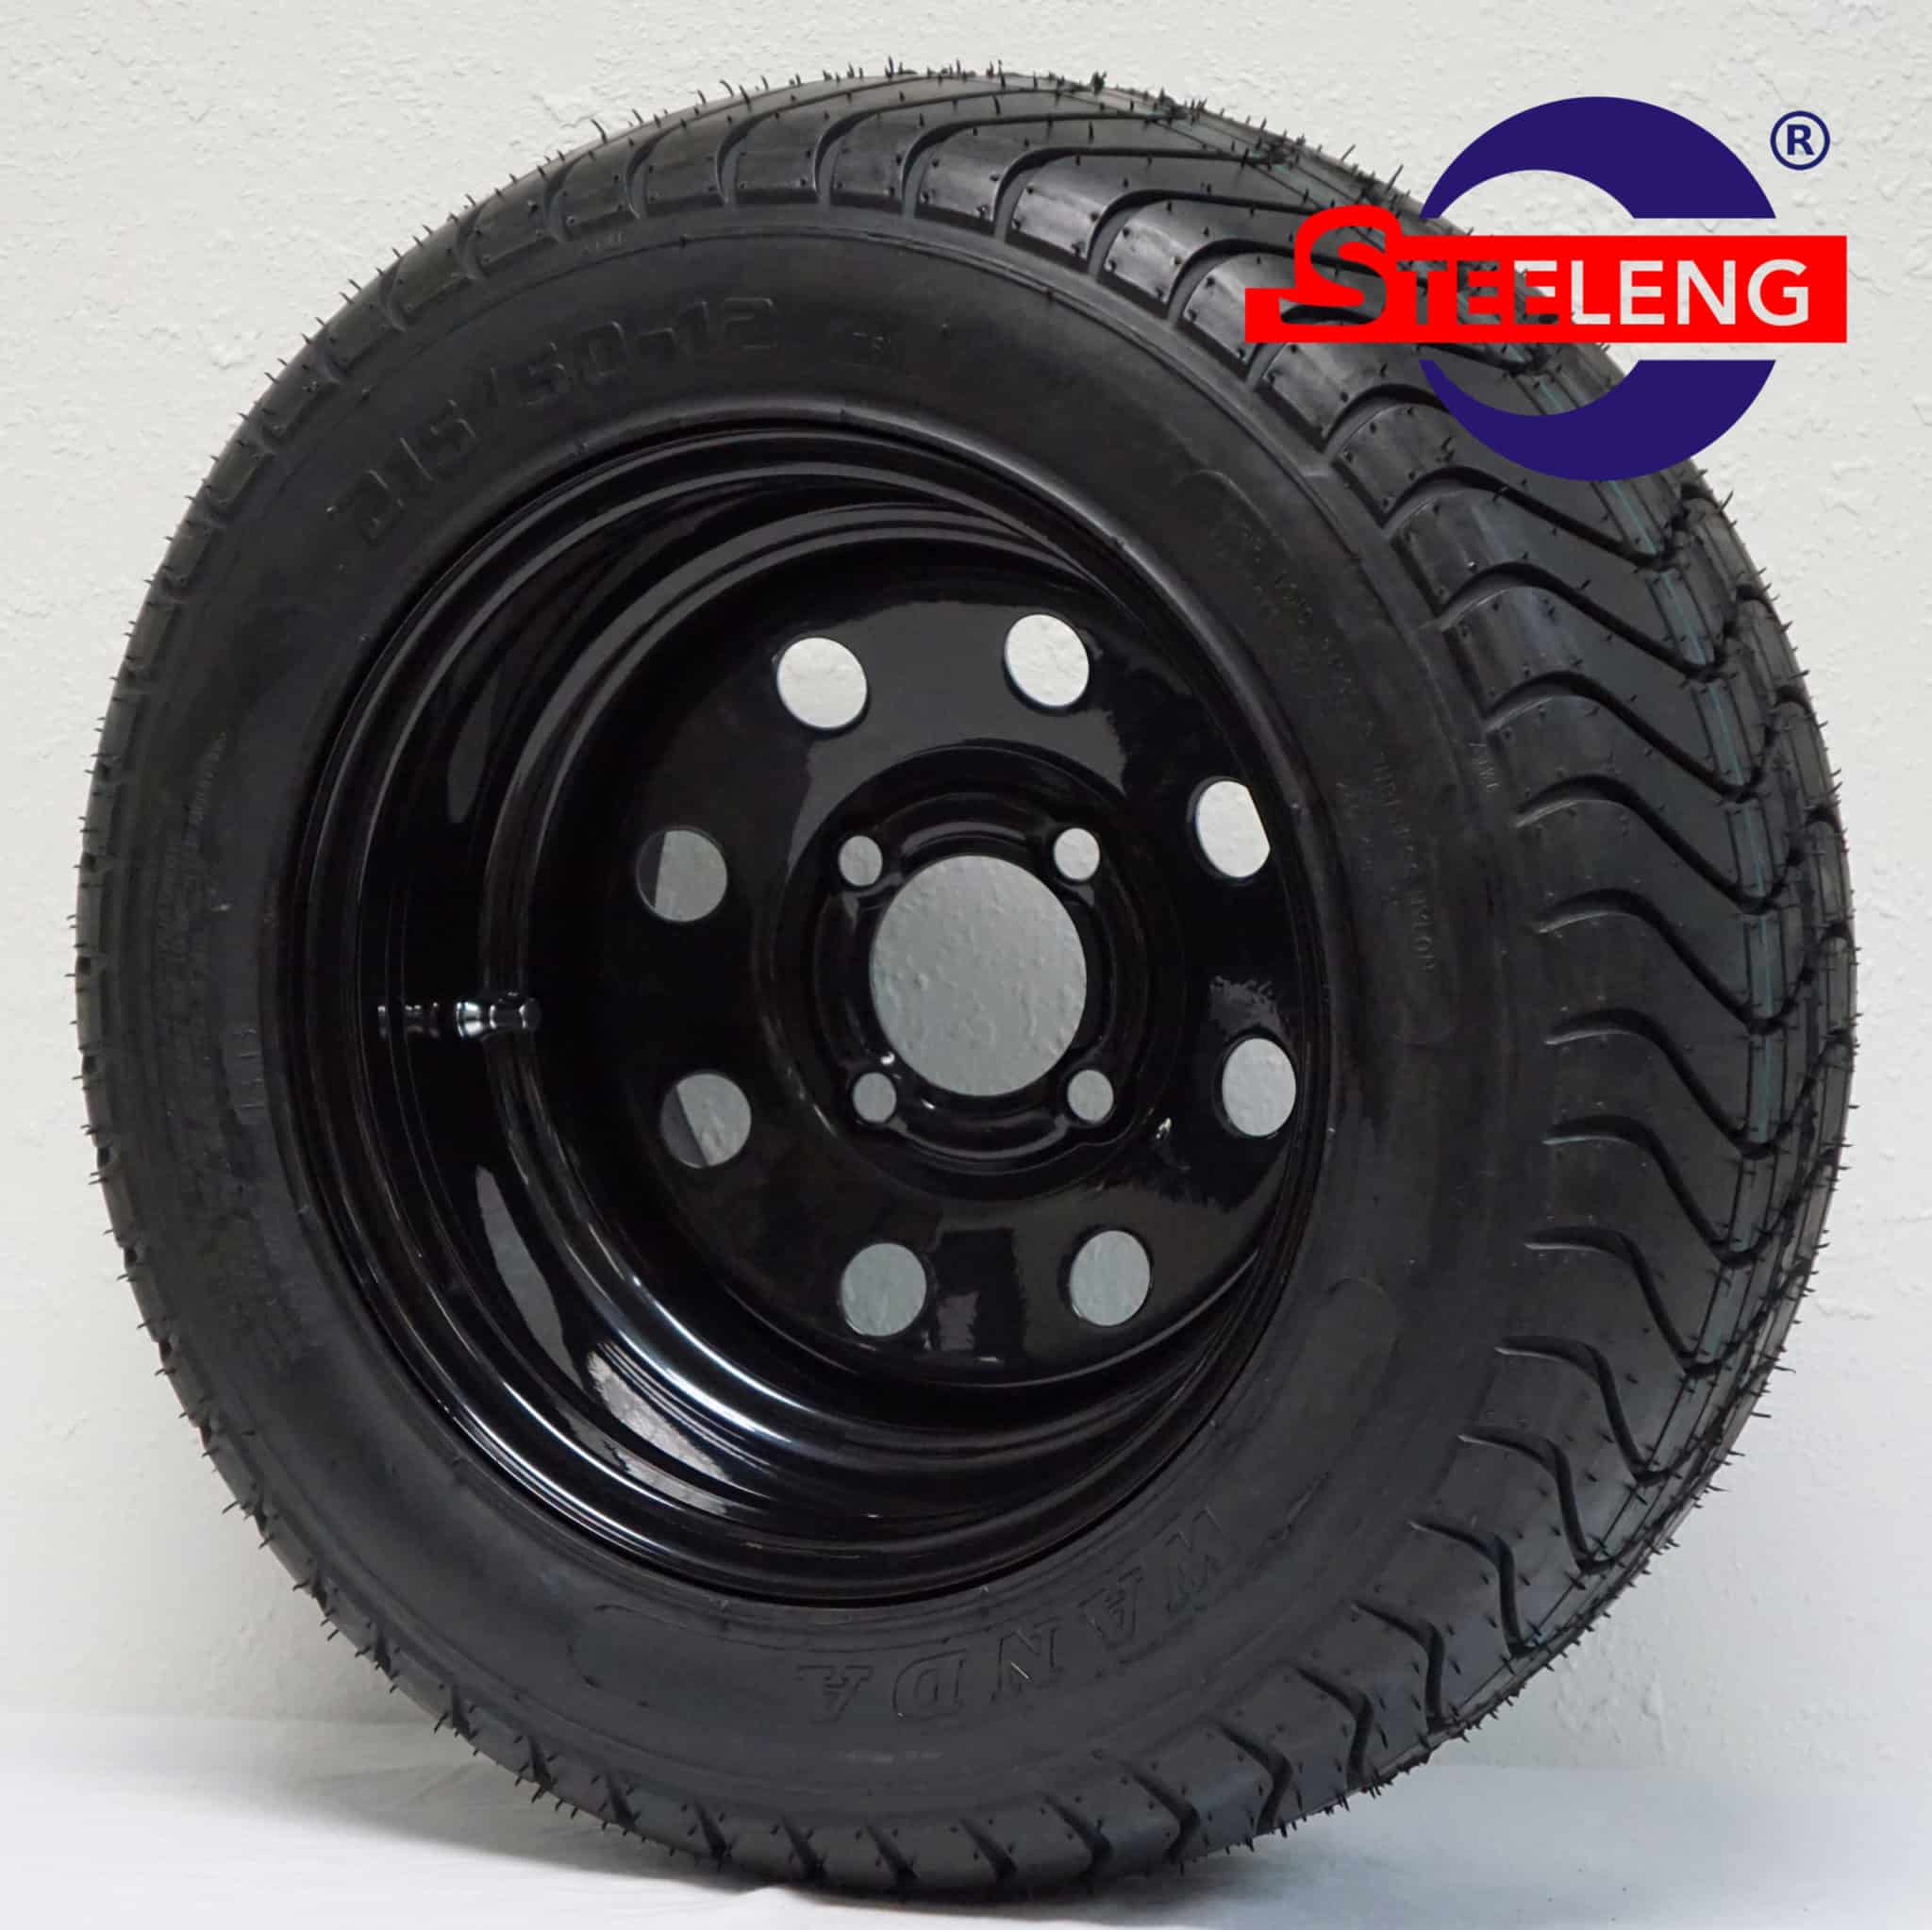 BNDL-SW1202-TR1213 12"x7" Steel Wheel Black 8 Holes & 215/50-12 Comfort Ride Street Tire DOT Approved